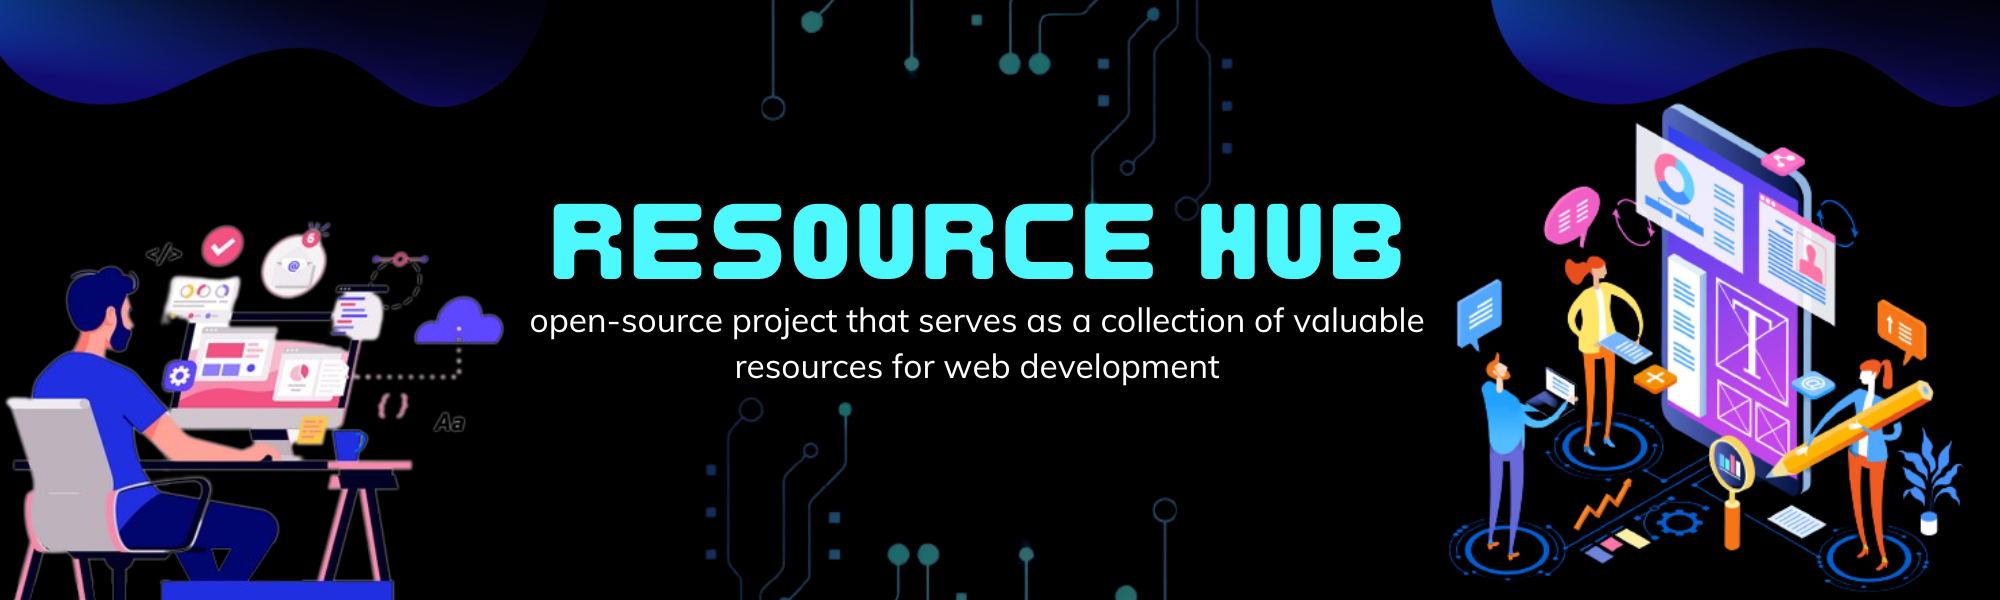 ResourceHub Banner